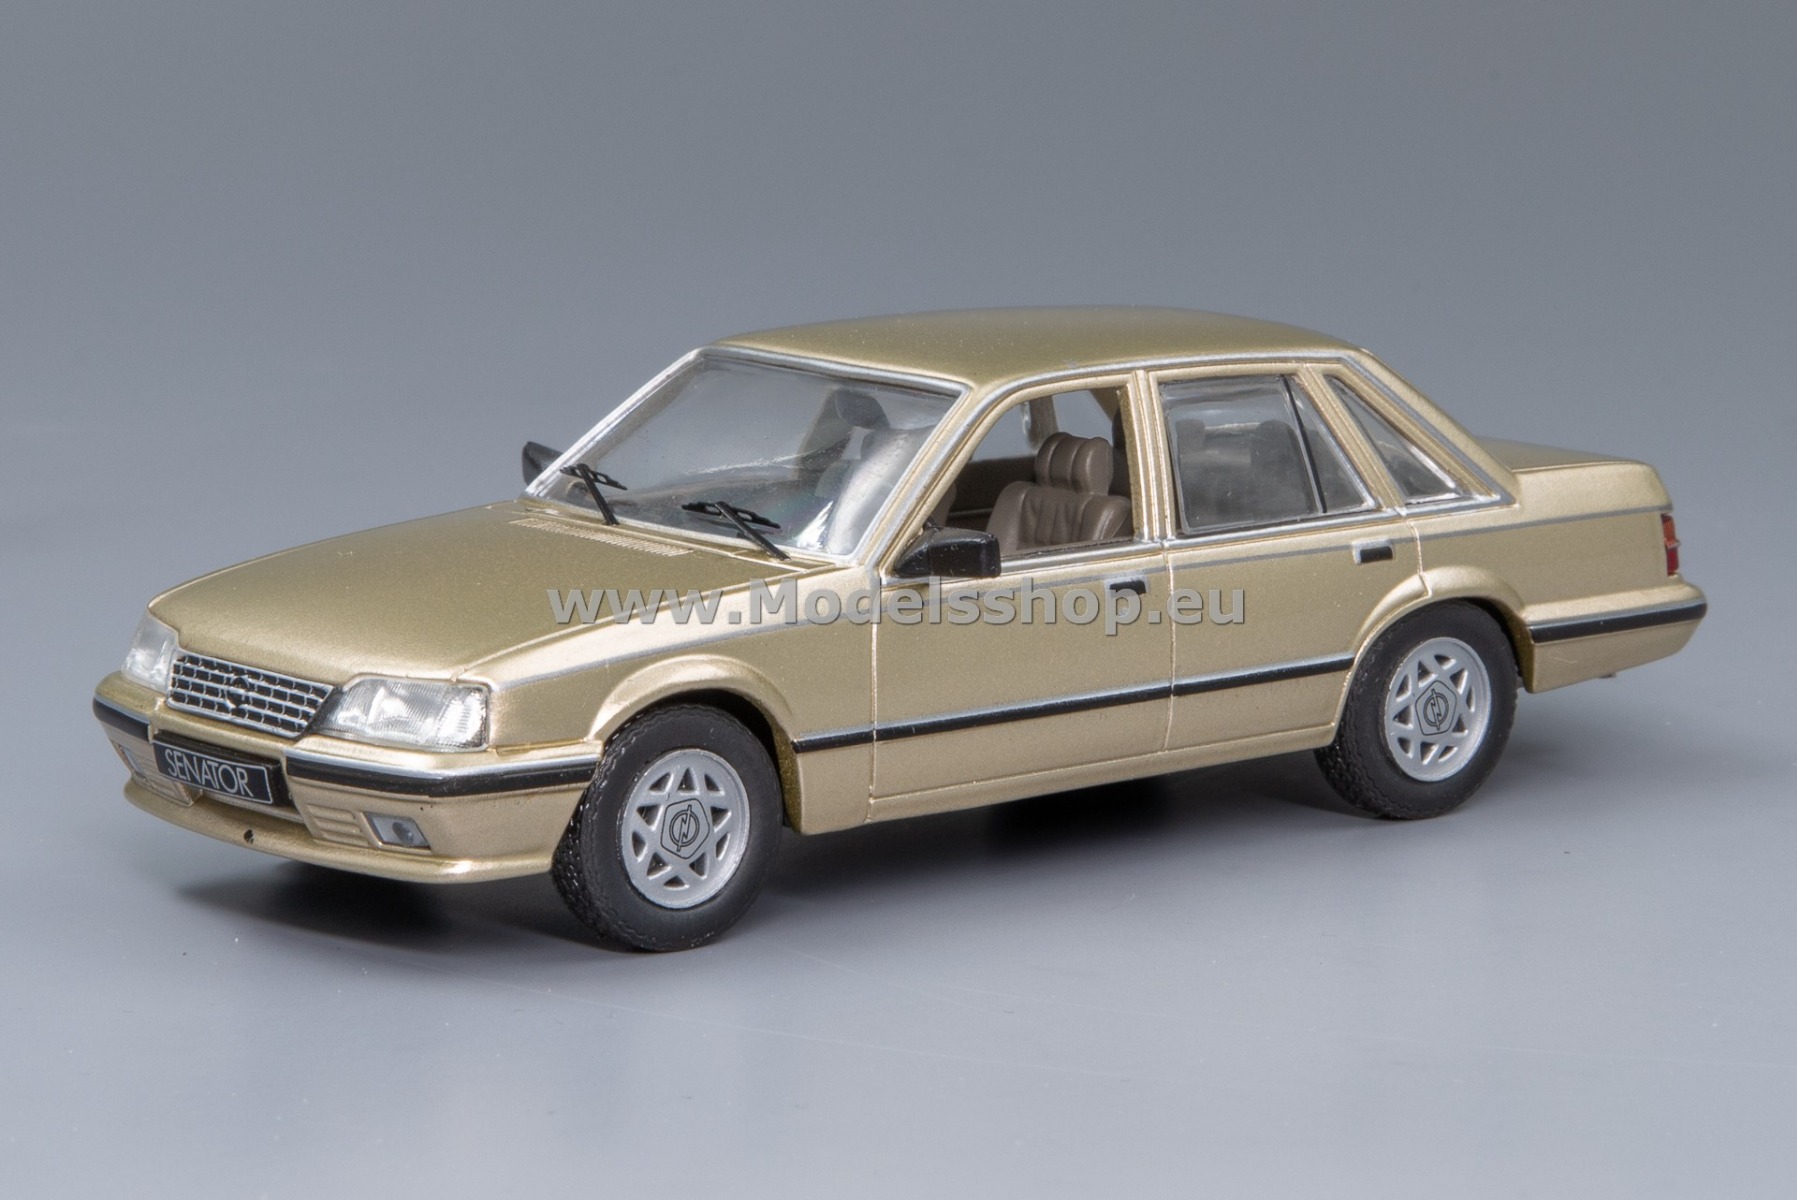 IXO CLC521N.22 Opel Senator A2, 1983 /light beige metallic/